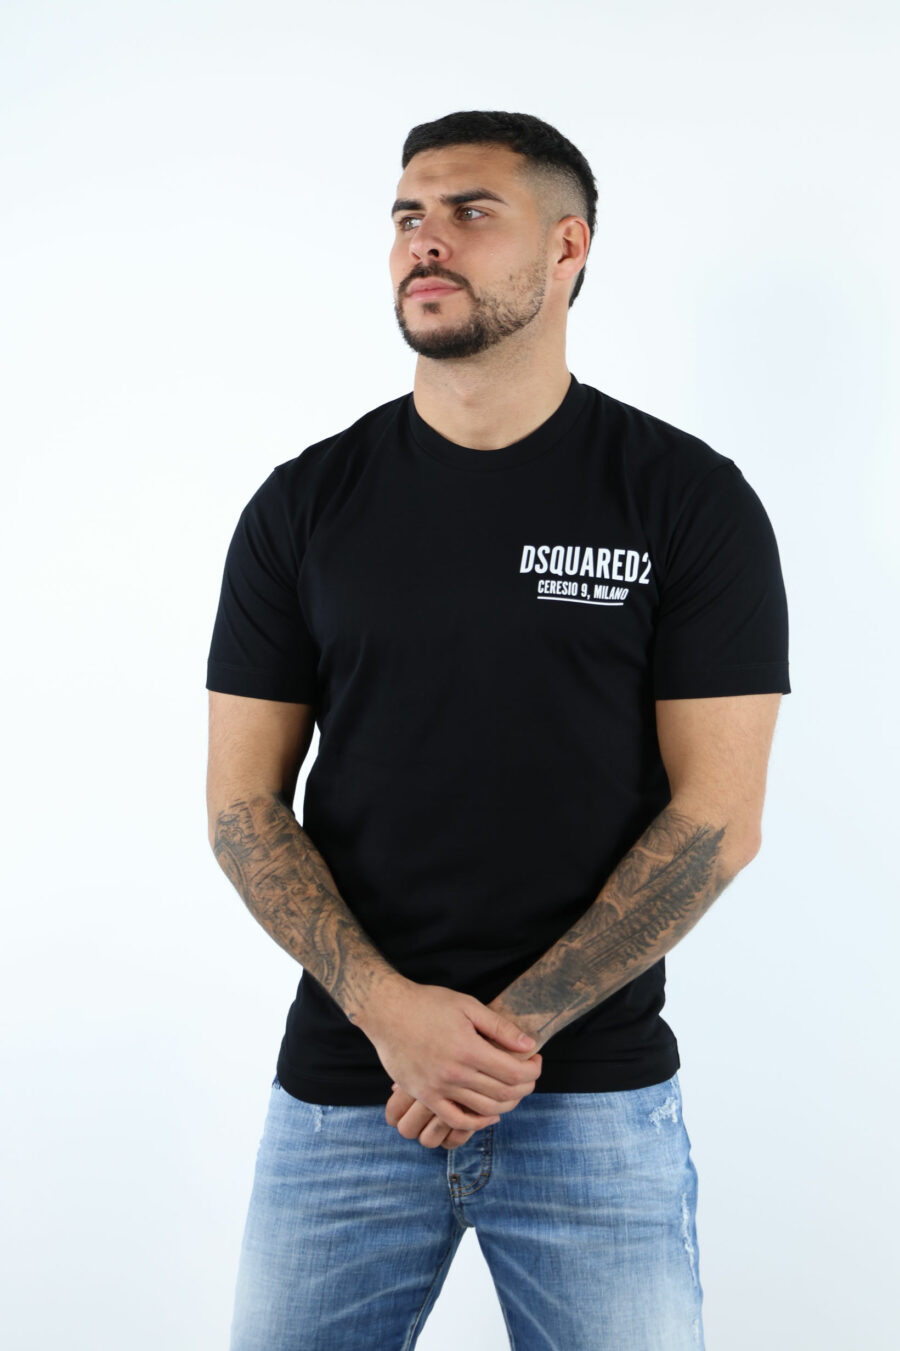 Black T-shirt with minilogo "ceresio 9, milano" - 106877